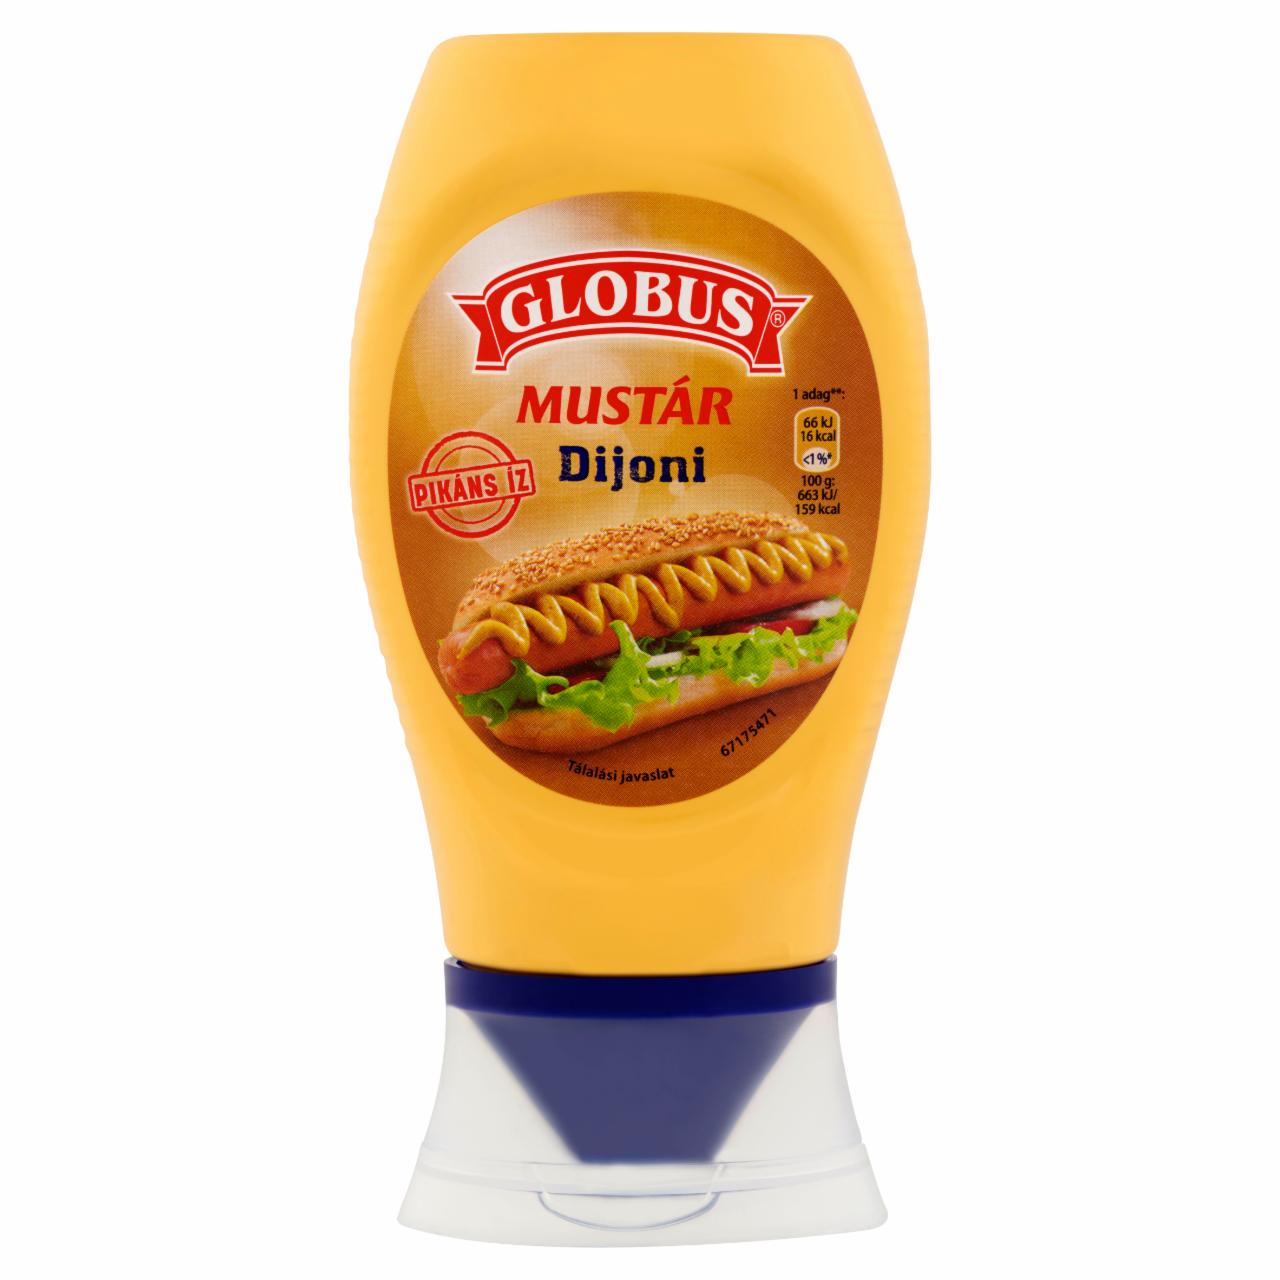 Képek - Globus dijoni mustár 265 g